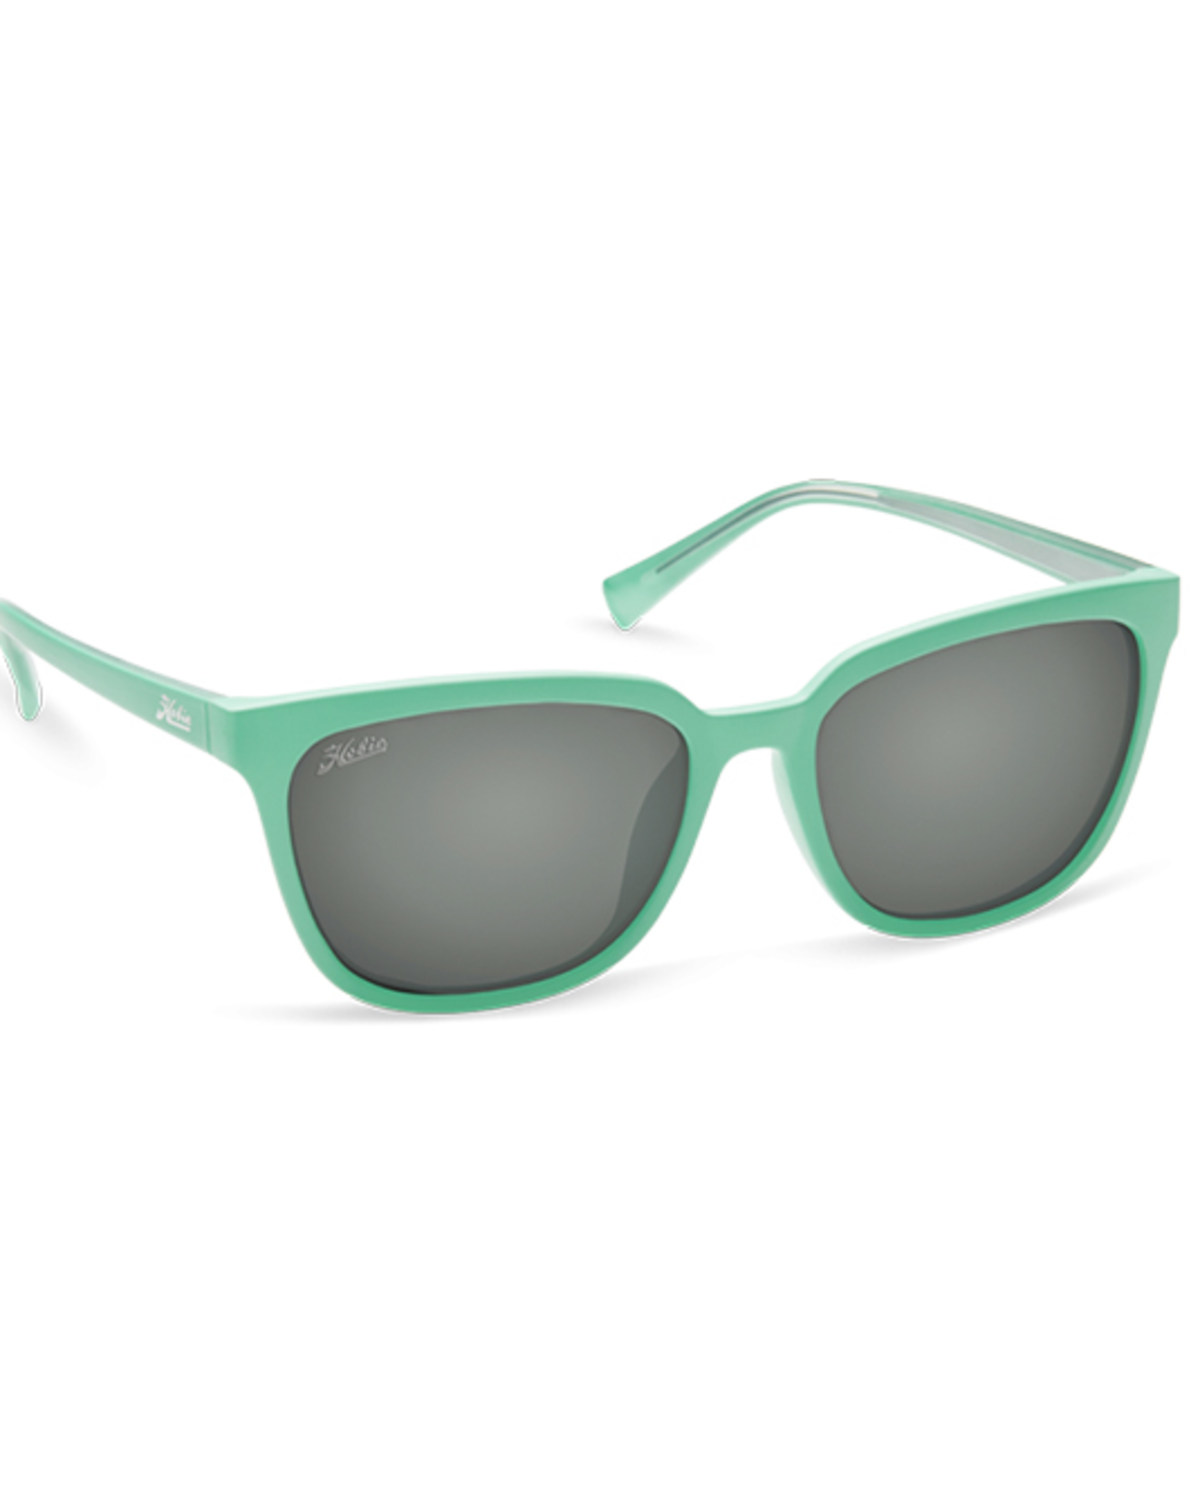 Hobie Women's Monica Aqua Satin & Gray Polarized Sunglasses